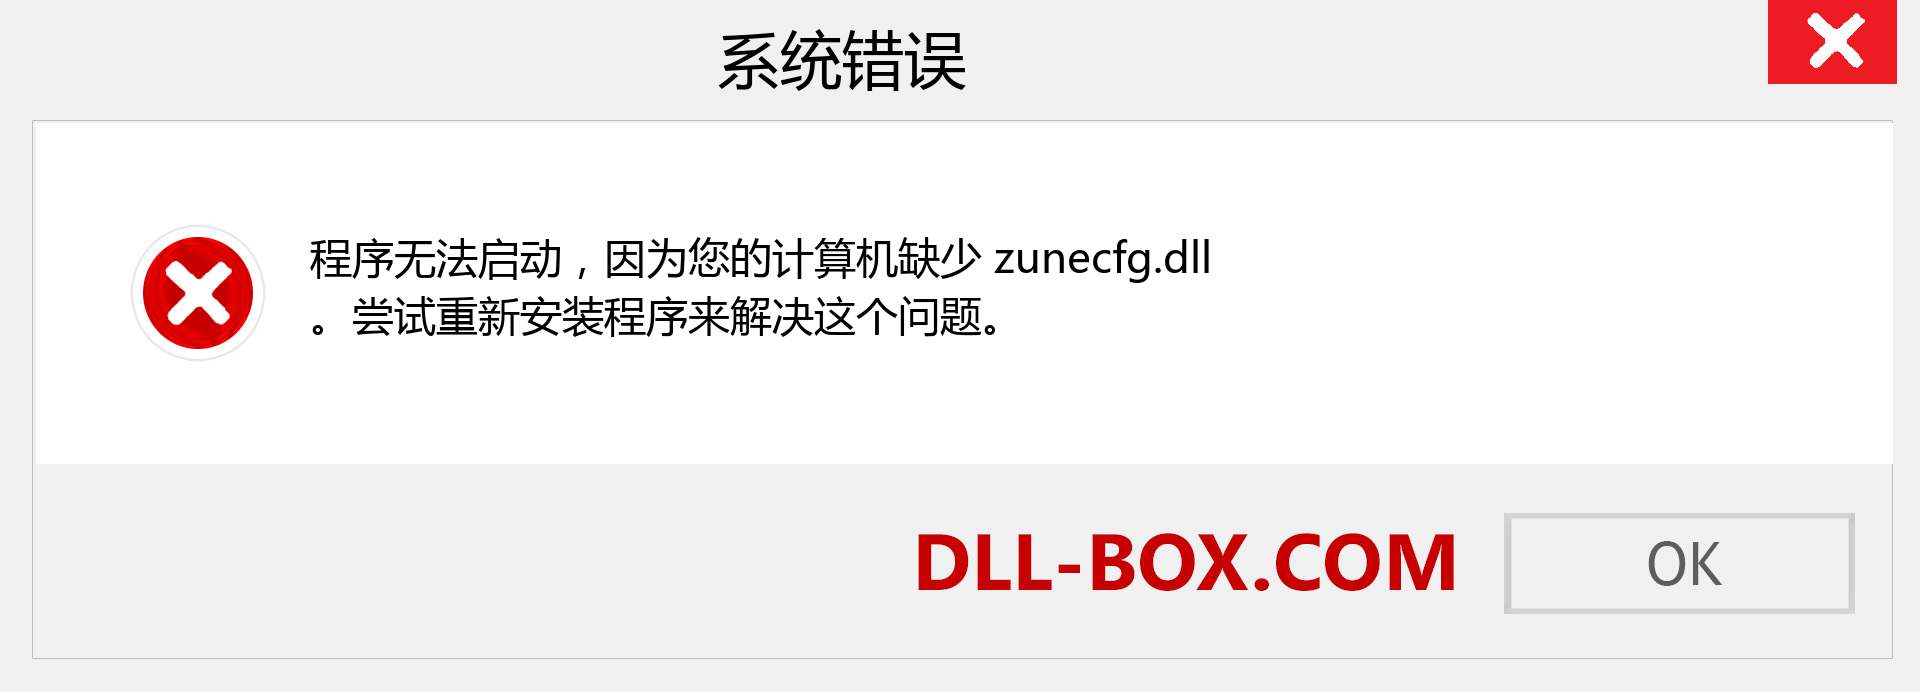 zunecfg.dll 文件丢失？。 适用于 Windows 7、8、10 的下载 - 修复 Windows、照片、图像上的 zunecfg dll 丢失错误